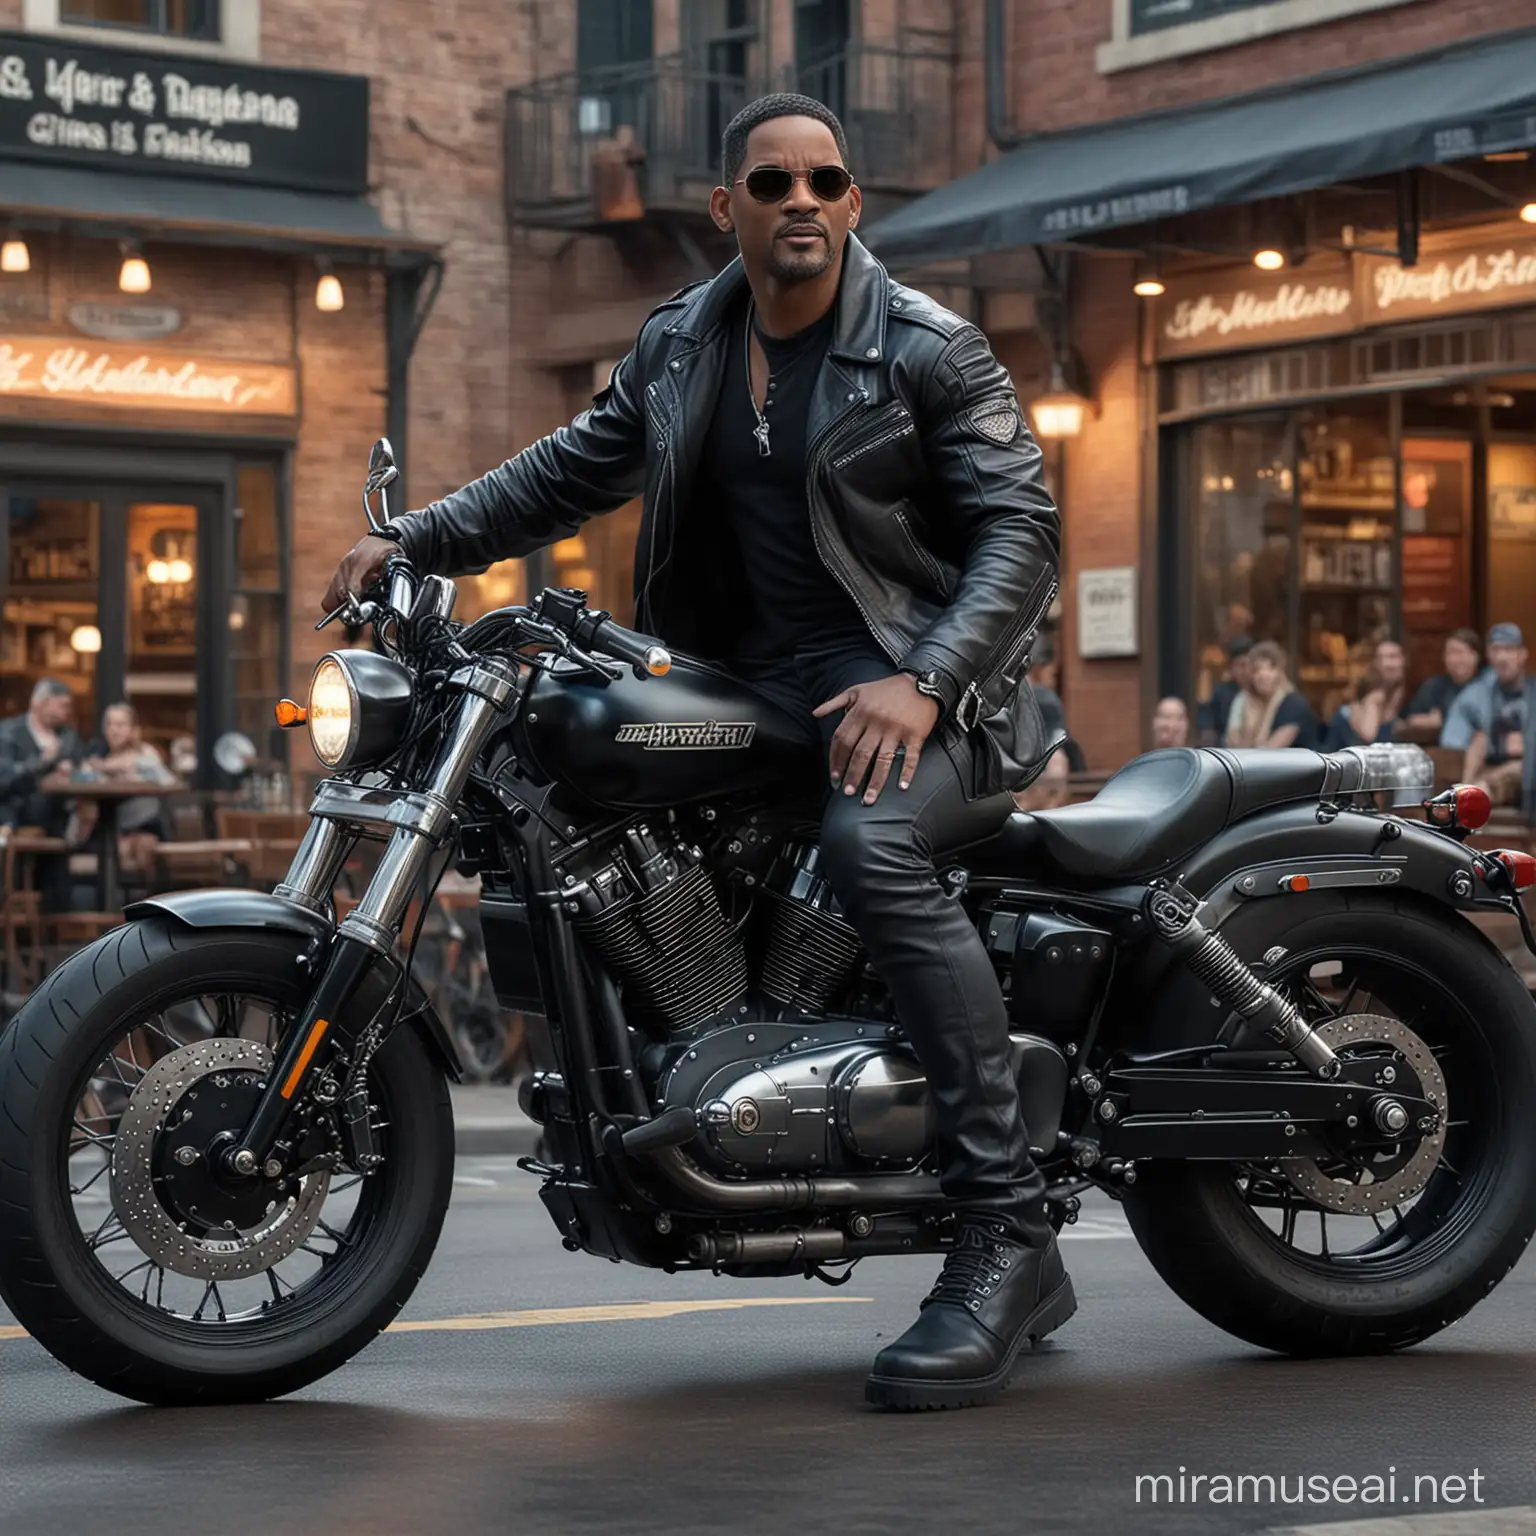 Will Smith Biker Portrait on HarleyDavidson Motorcycle